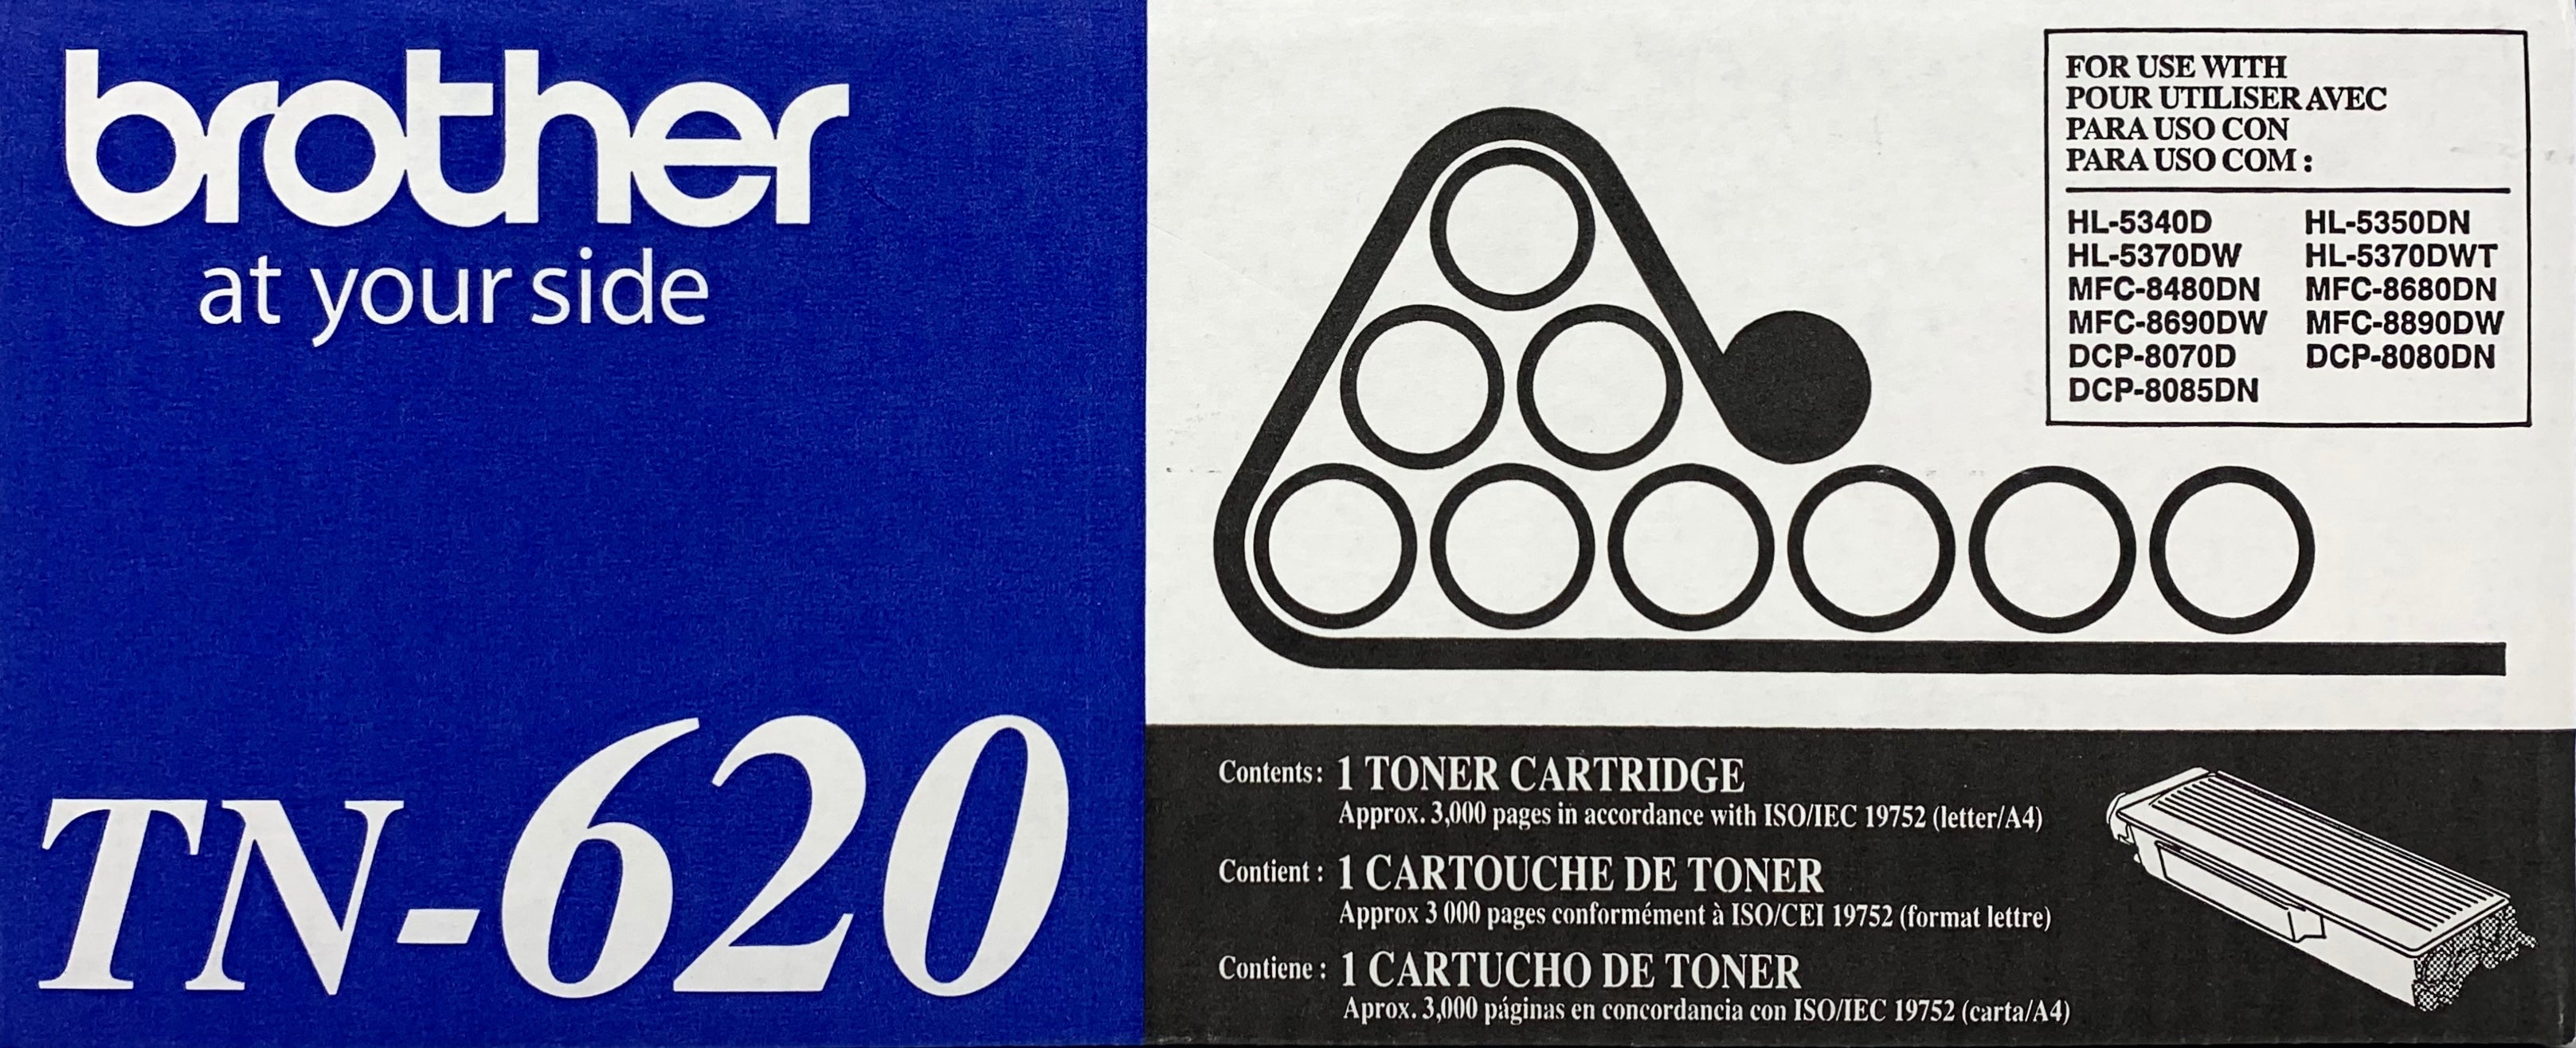 Brother TN-620 Black Laser Toner Cartridge